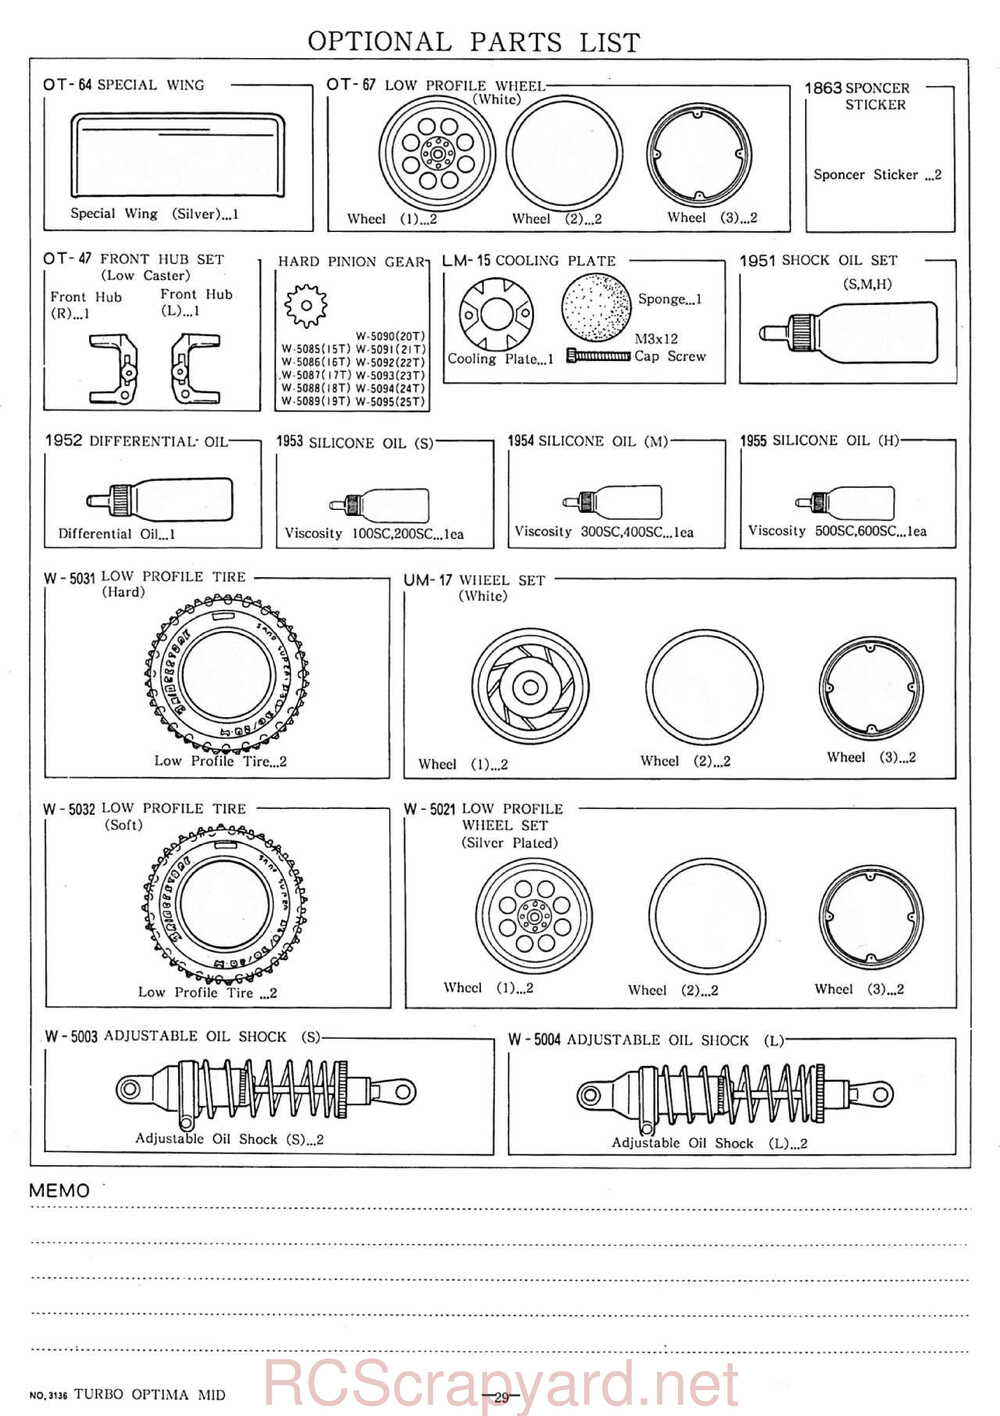 Kyosho - 3136 - Turbo-Optima-Mid - Manual - Page 27